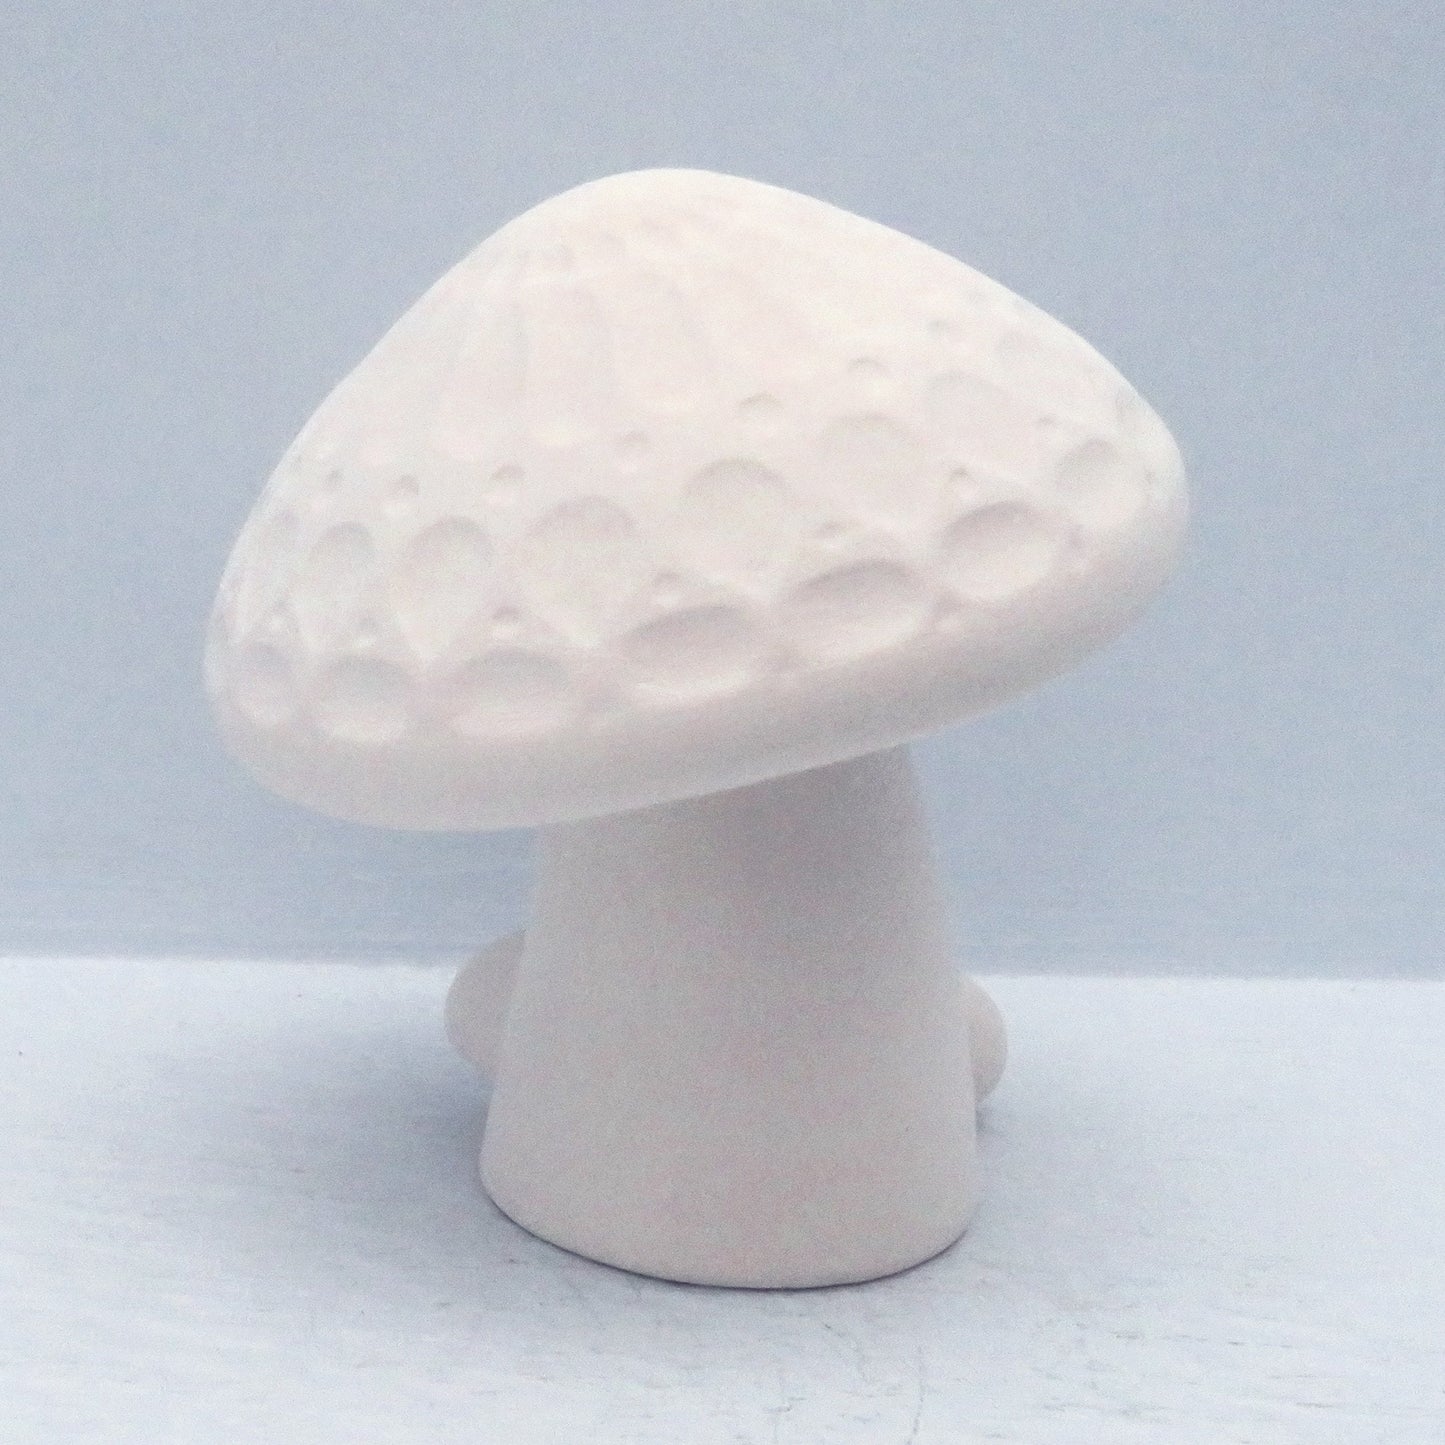 Handmade Ready to Paint Ceramic Mushroom Figurine  / Ceramics to Paint / Paintable Ceramic Mushroom Statue / Housewarming Gift